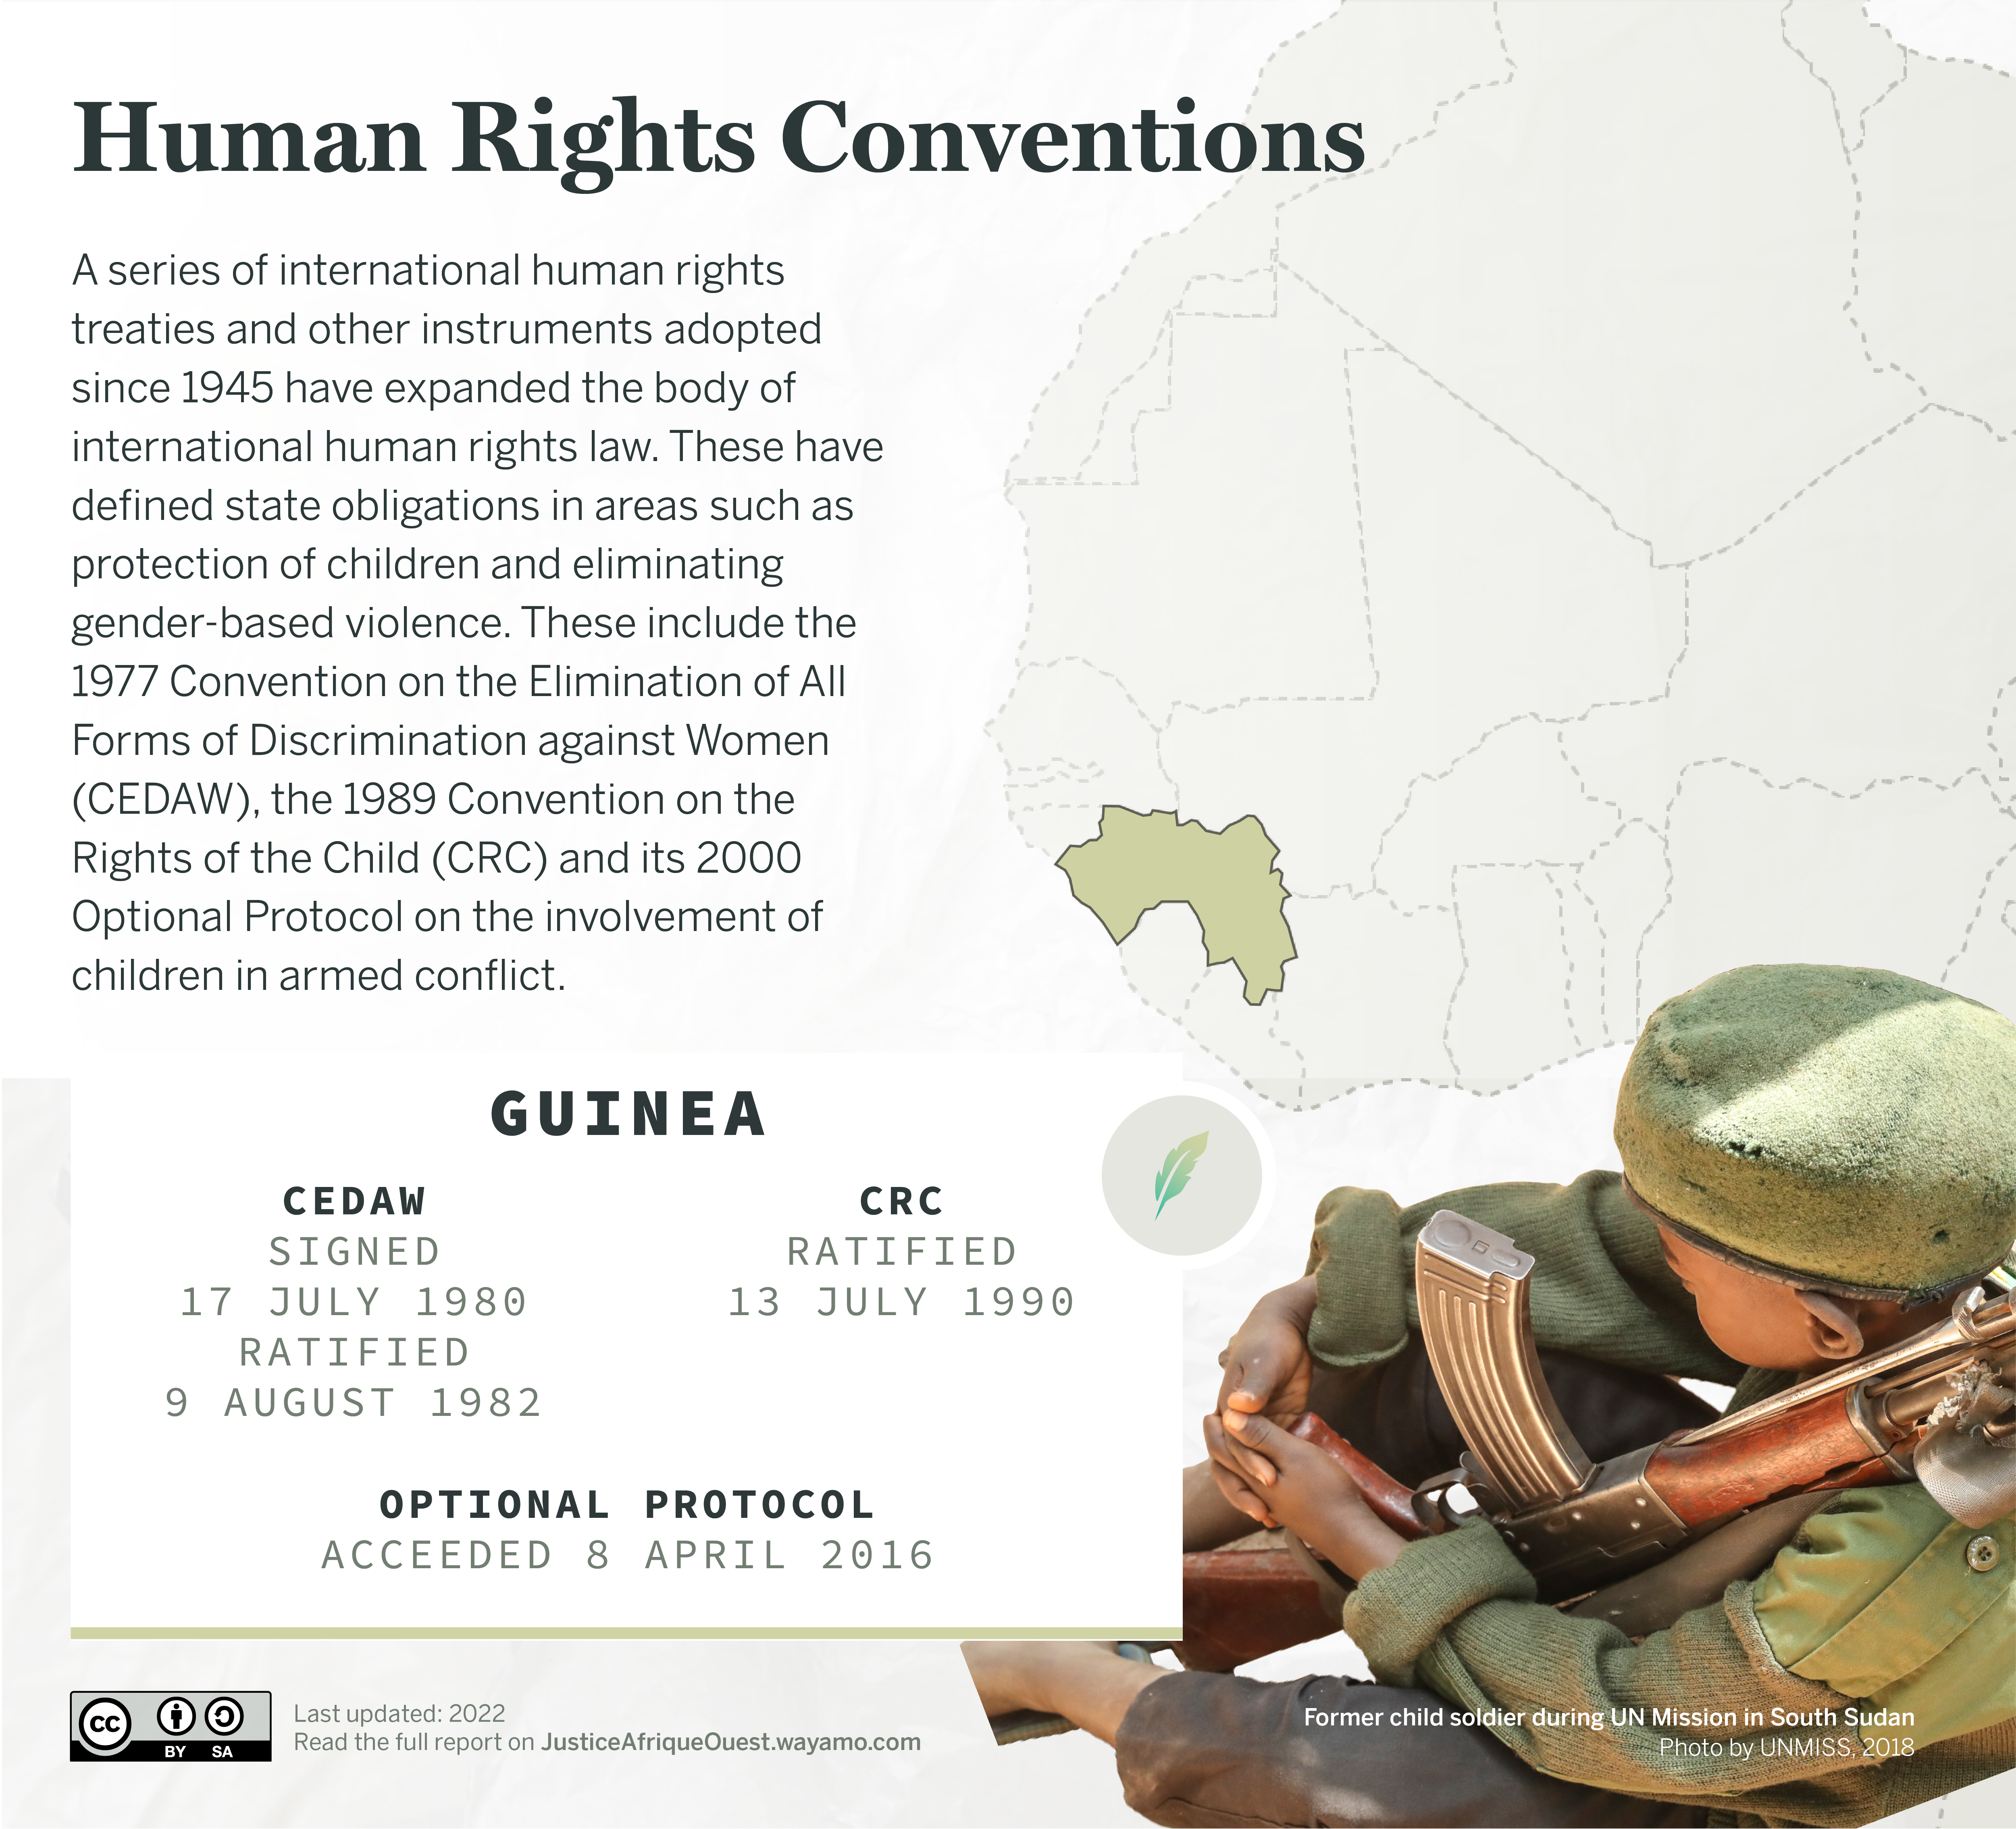 GUINEA_Human-Rights-Conventions_2-Wayamo-Foundation-CC-BY-SA-4.0